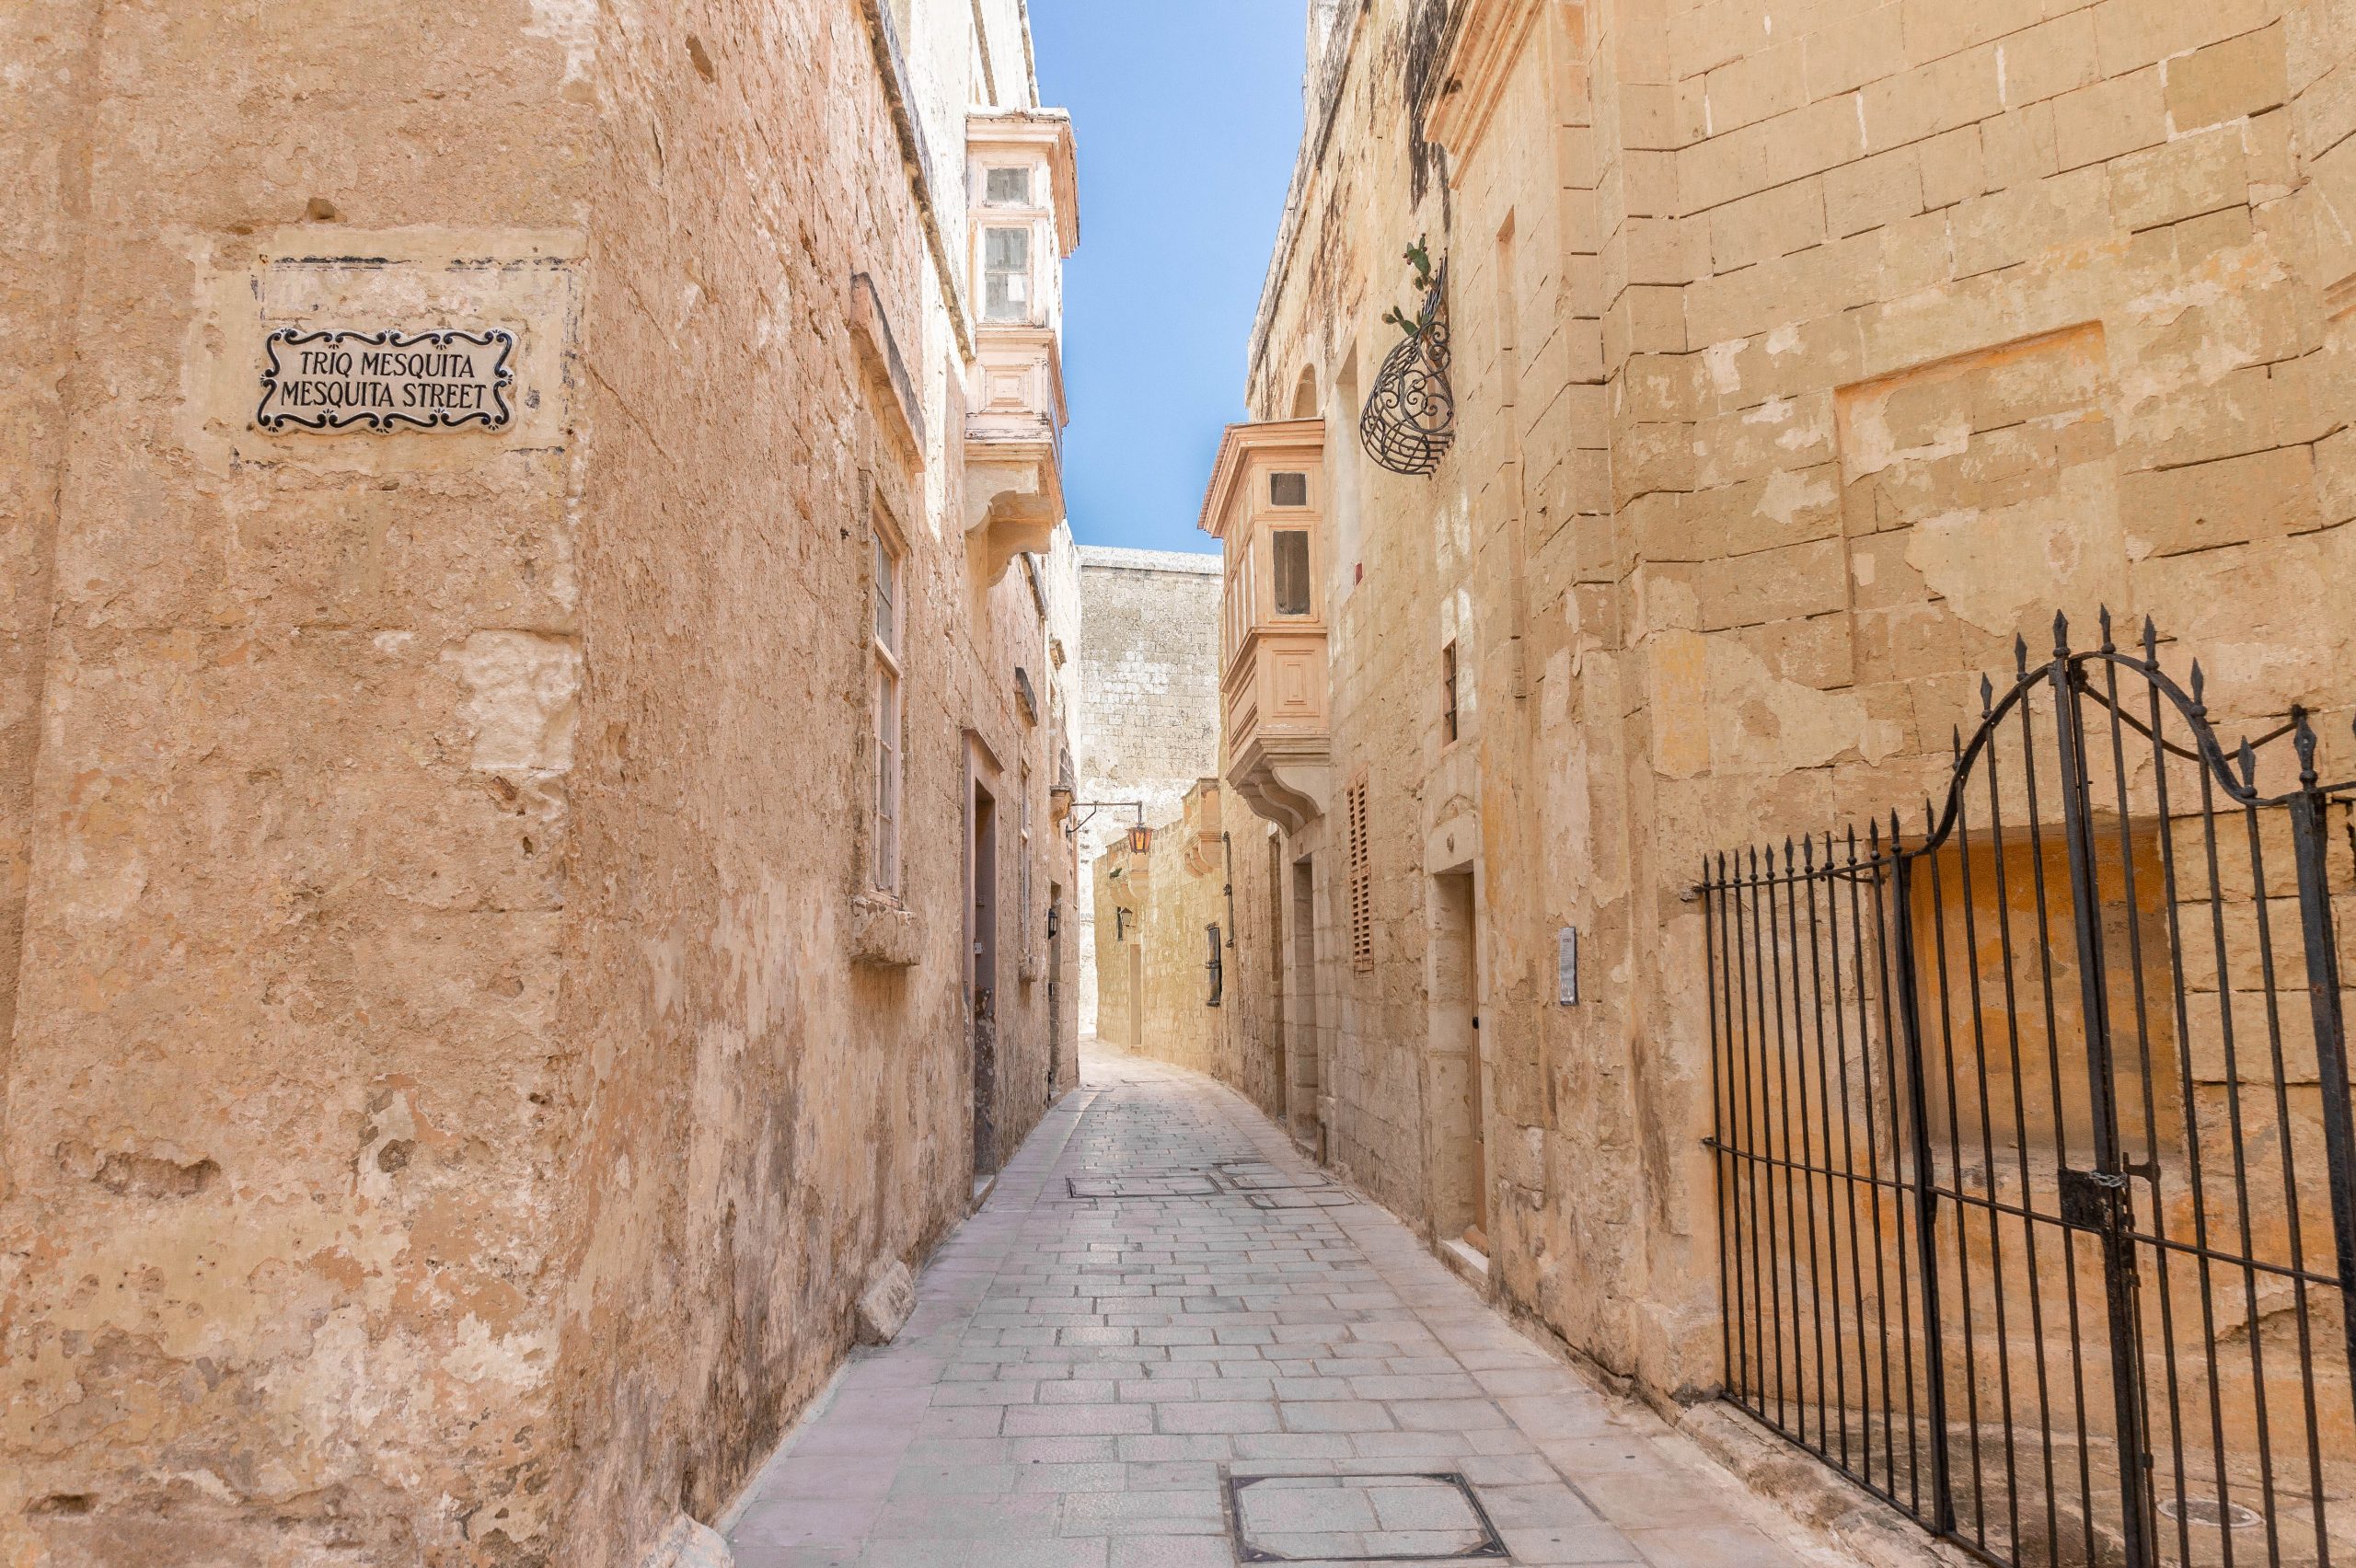 Mdina - The "Silent City" of Malta